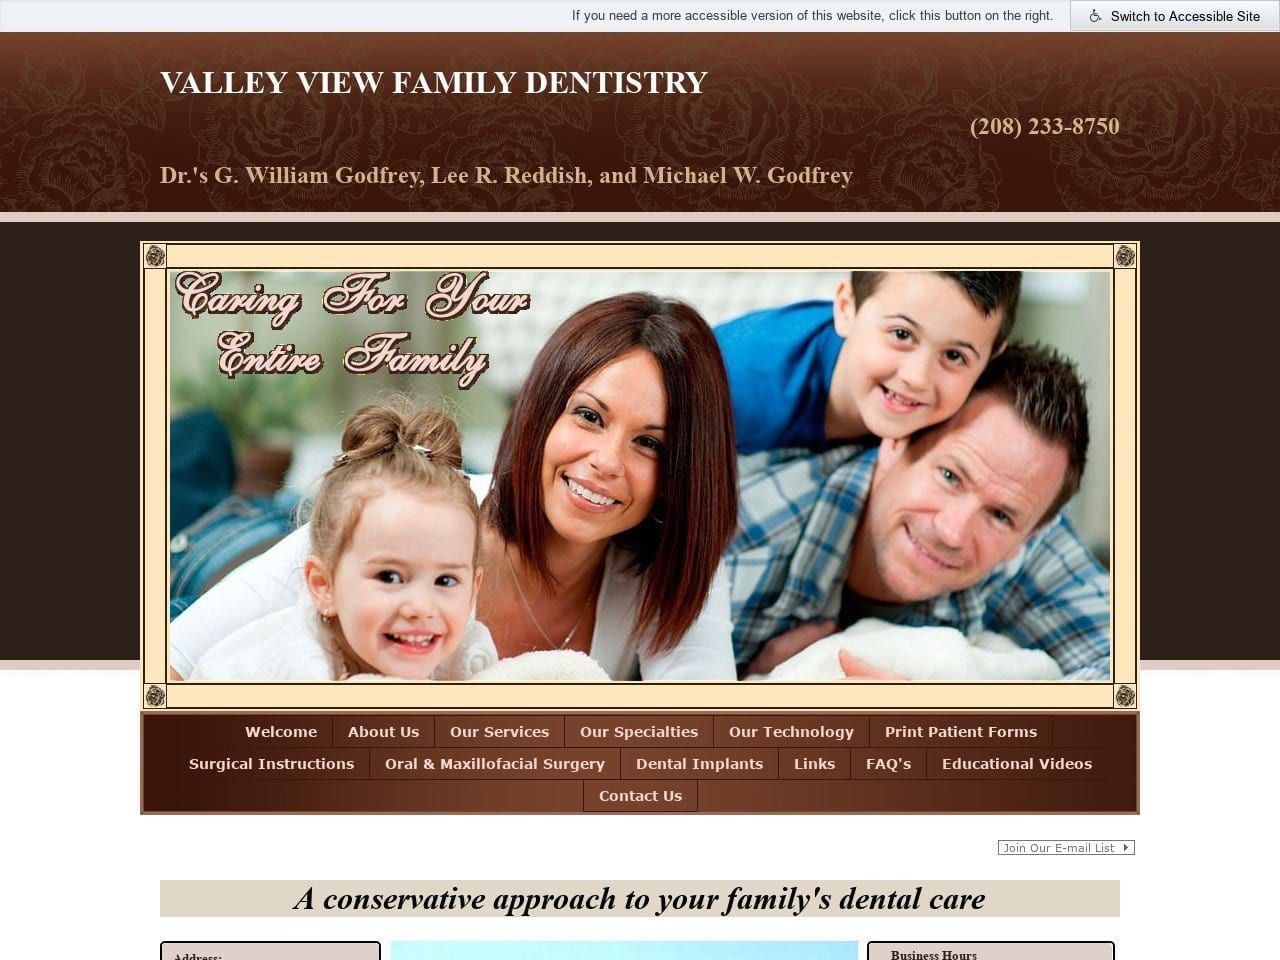 Valley View Family Dentistry Reddish Lee R DDS Website Screenshot from valleyviewdentistry.com